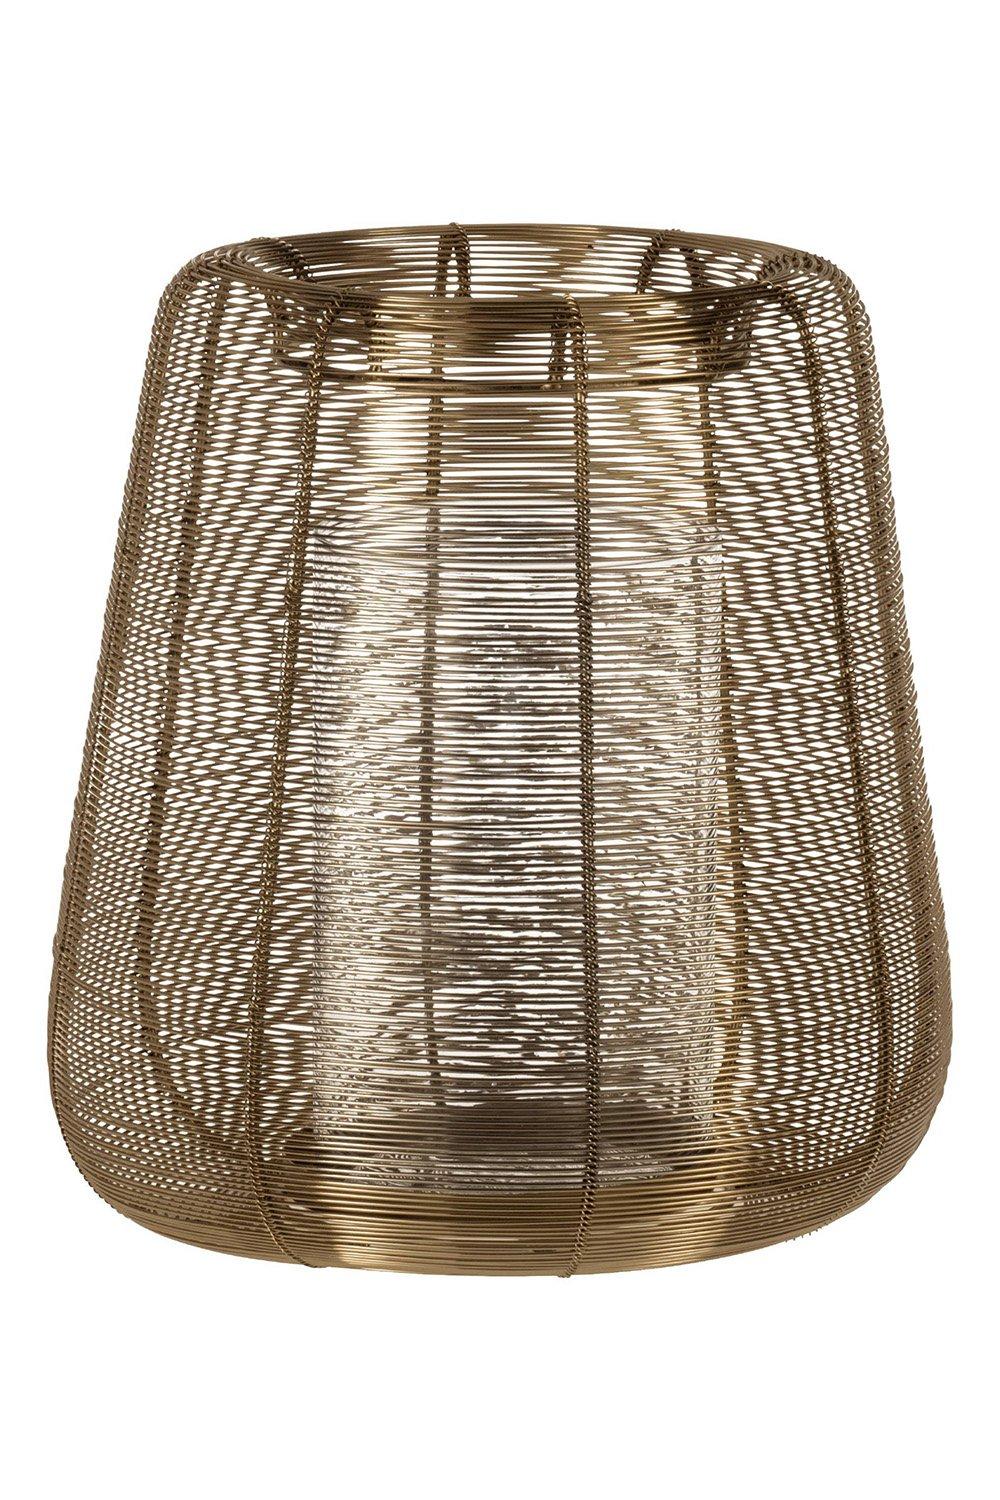 Hagony Candleholder With Gold Wireframe Bowl